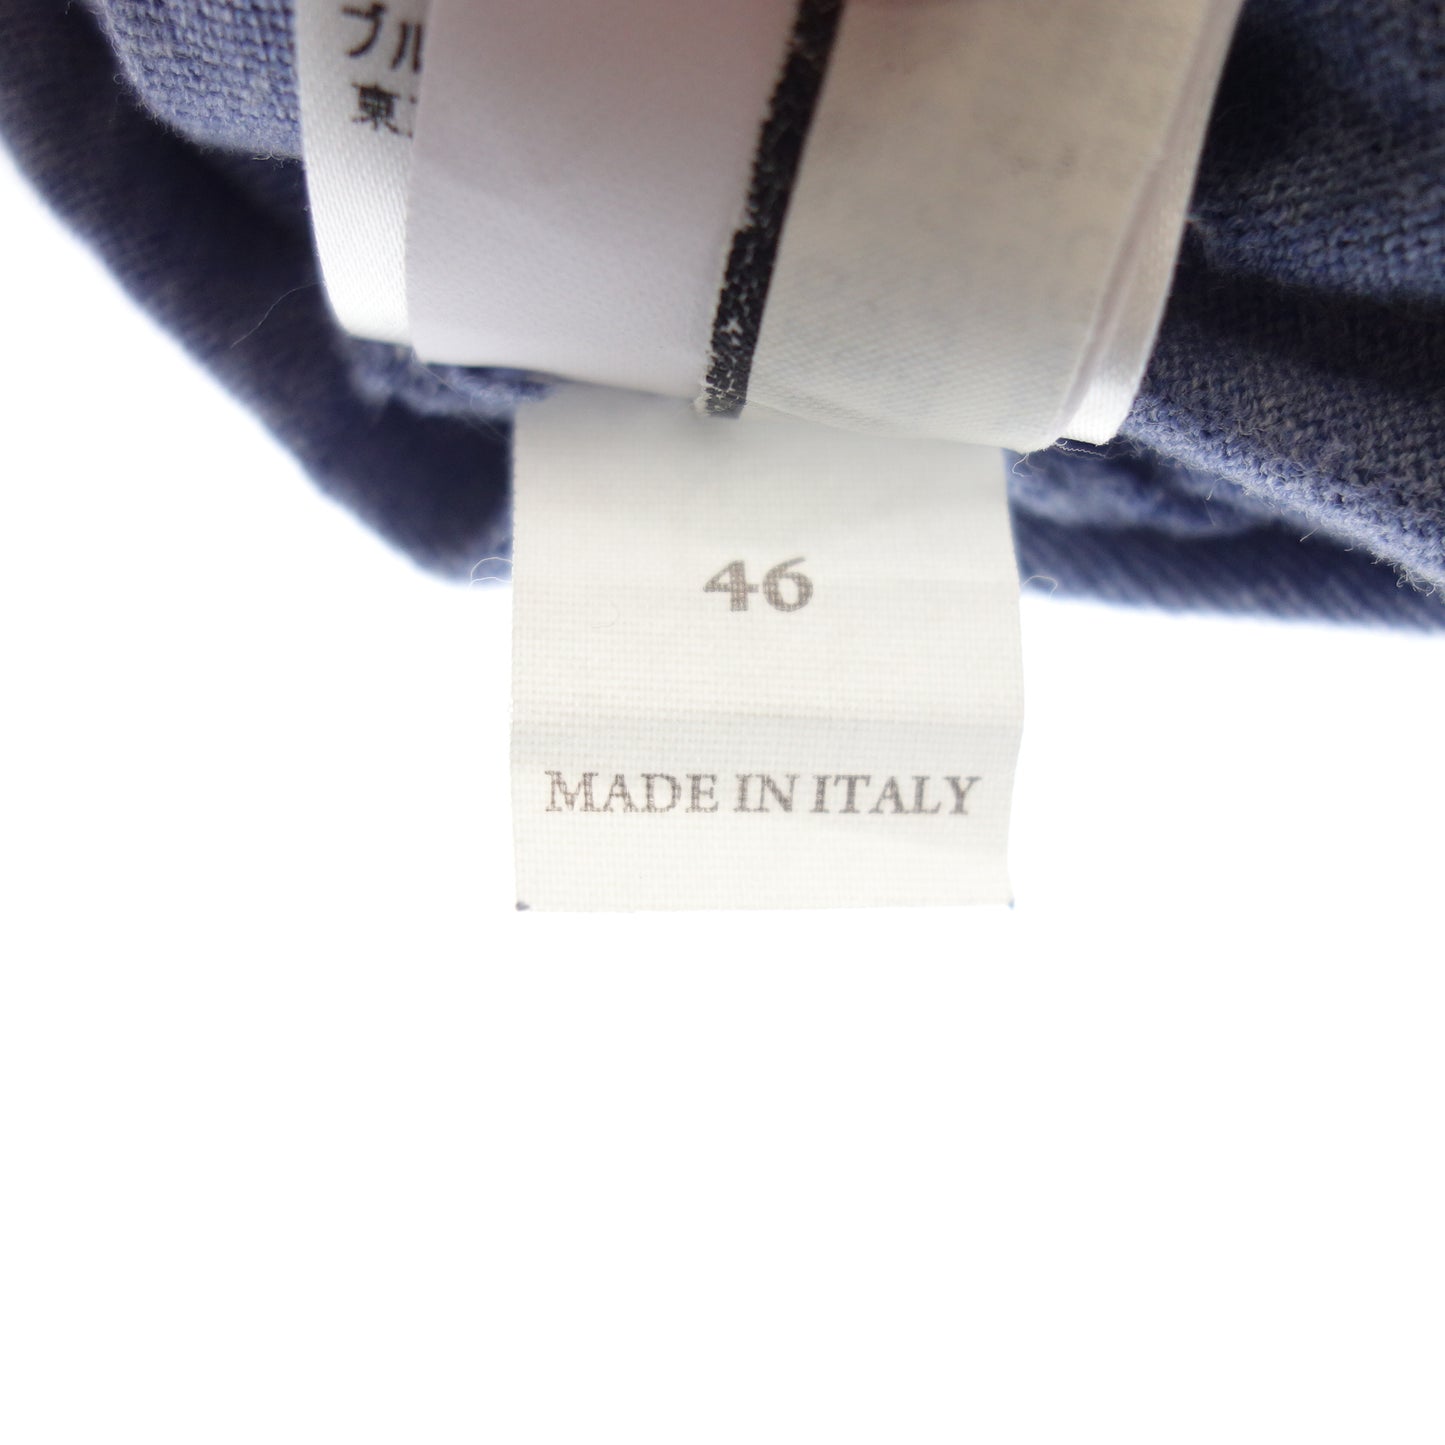 状况良好◆Brunello Cucinelli 针织毛衣 V 领男式蓝色 46 号 BRUNELLO CUCINELLI [AFB16] 